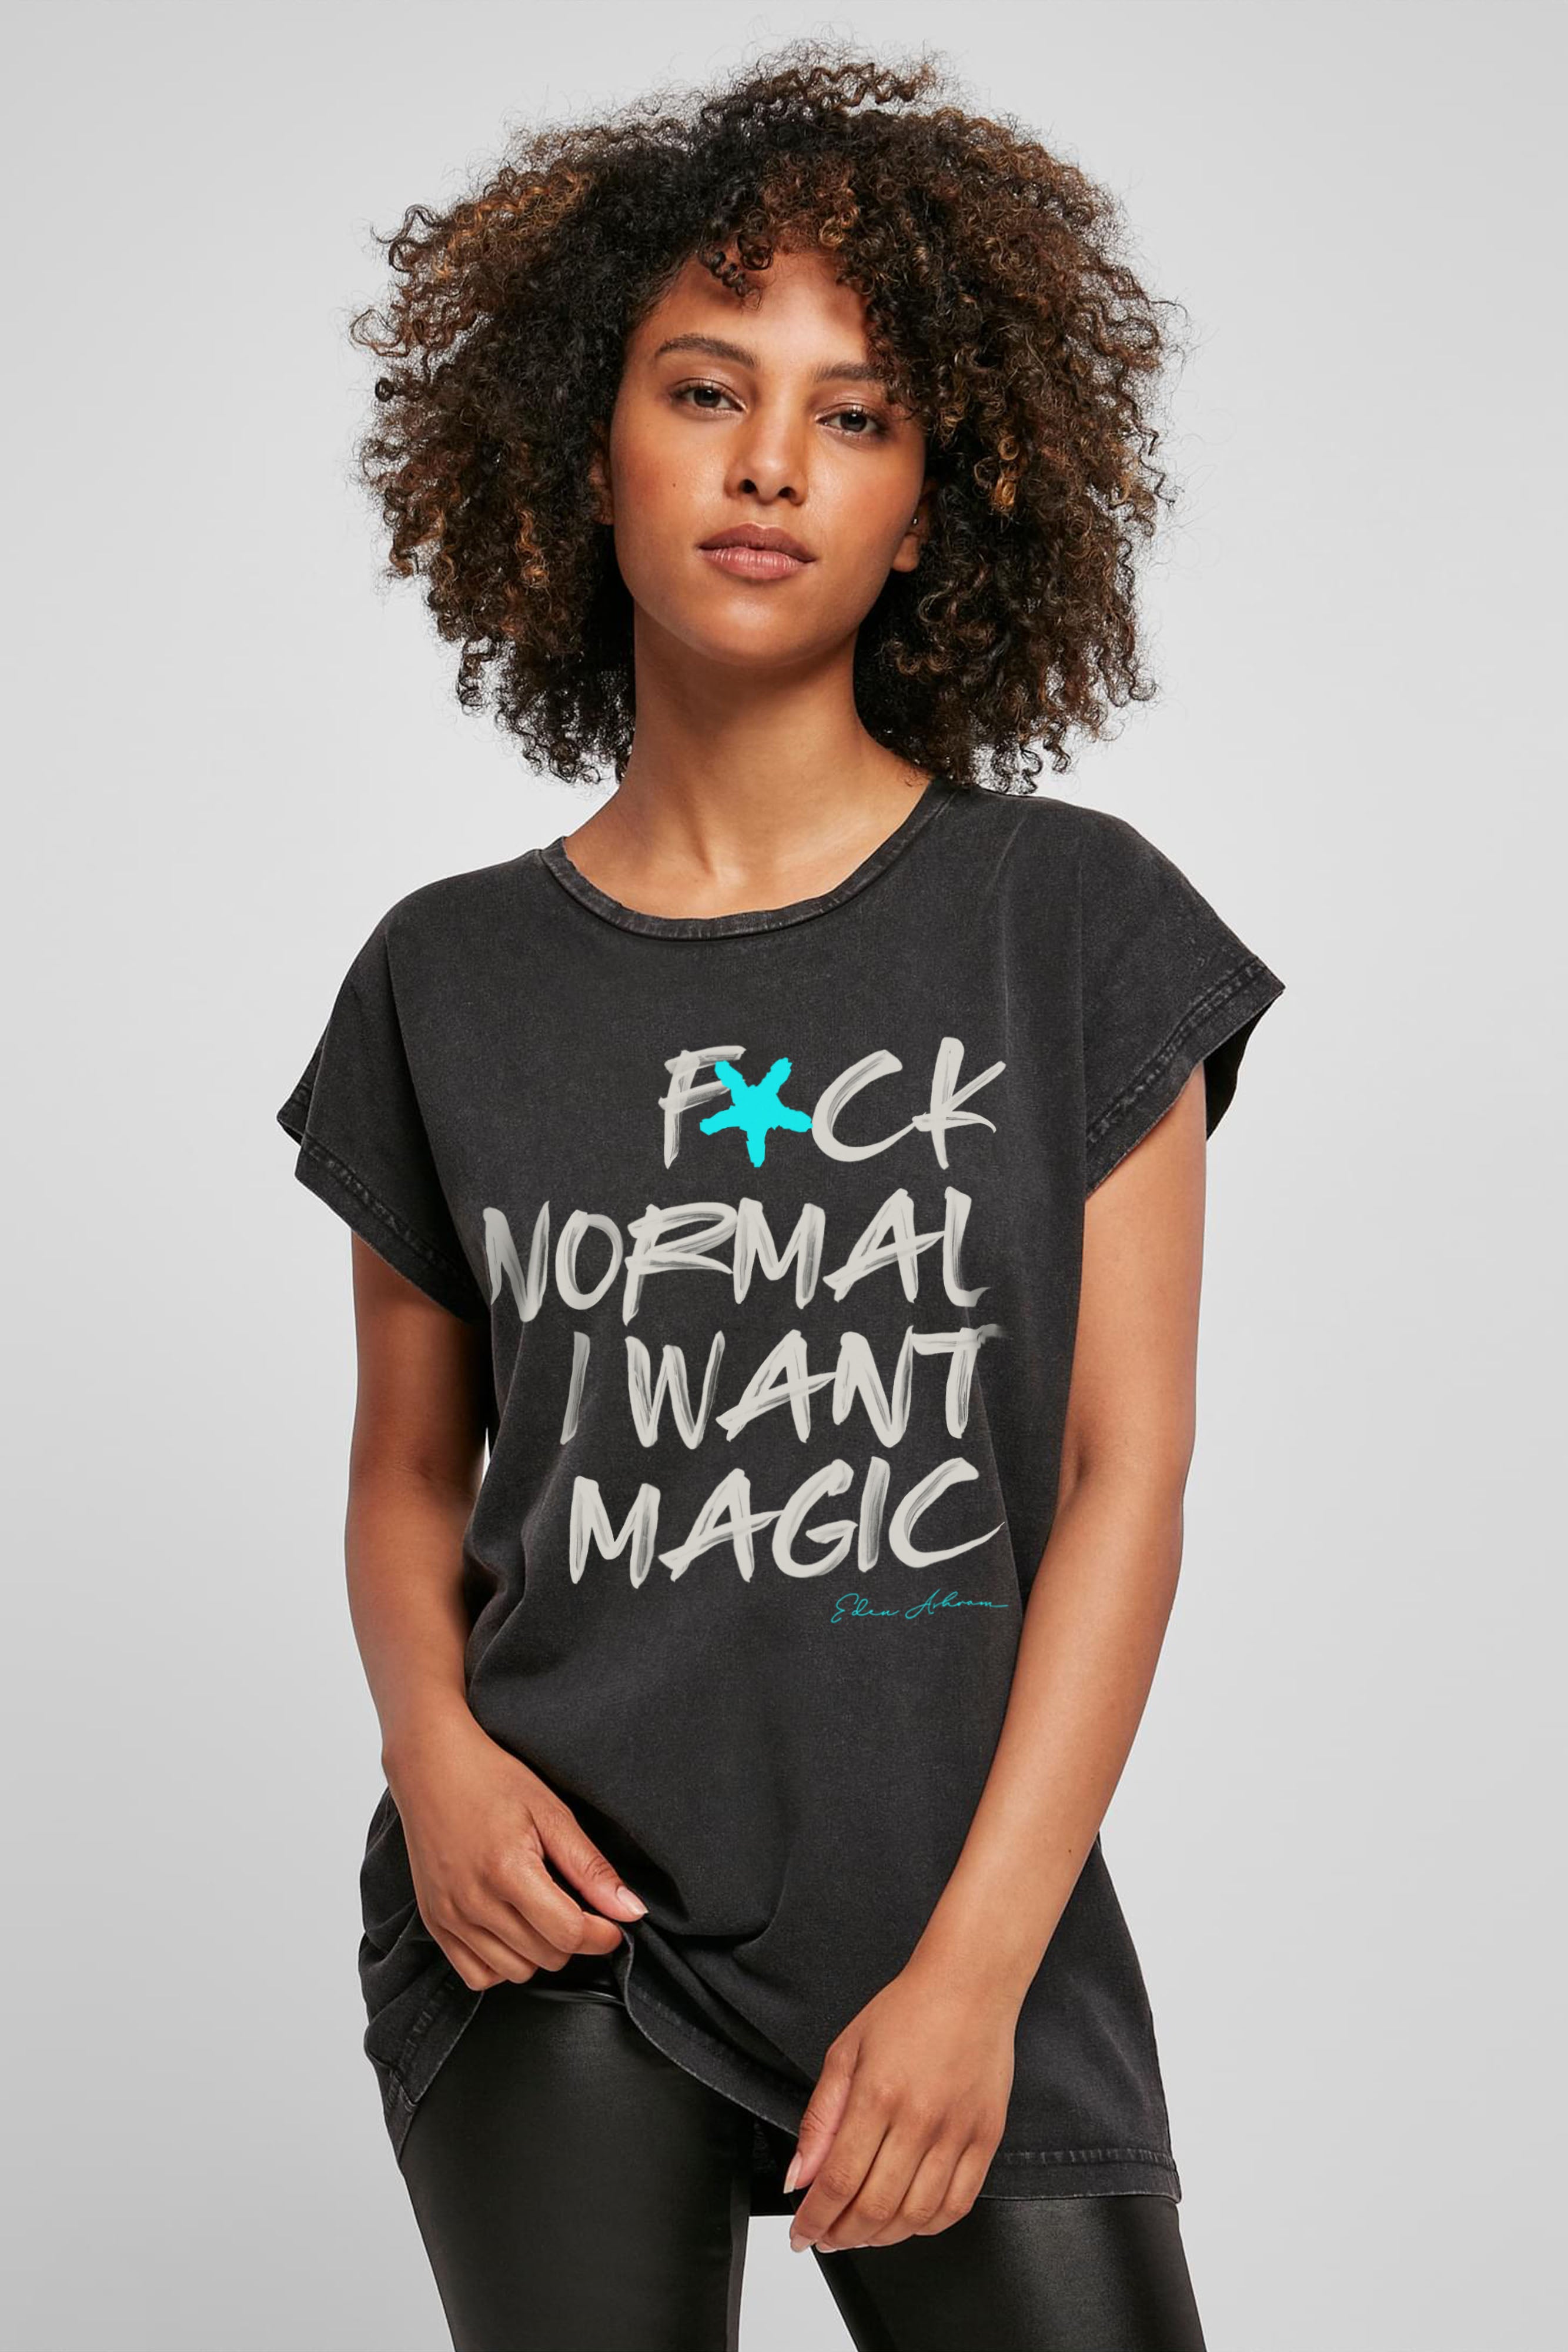 EDEN ASHRAM F*ck Normal I Want Magic Premium Relaxed Boyfriend T-Shirt